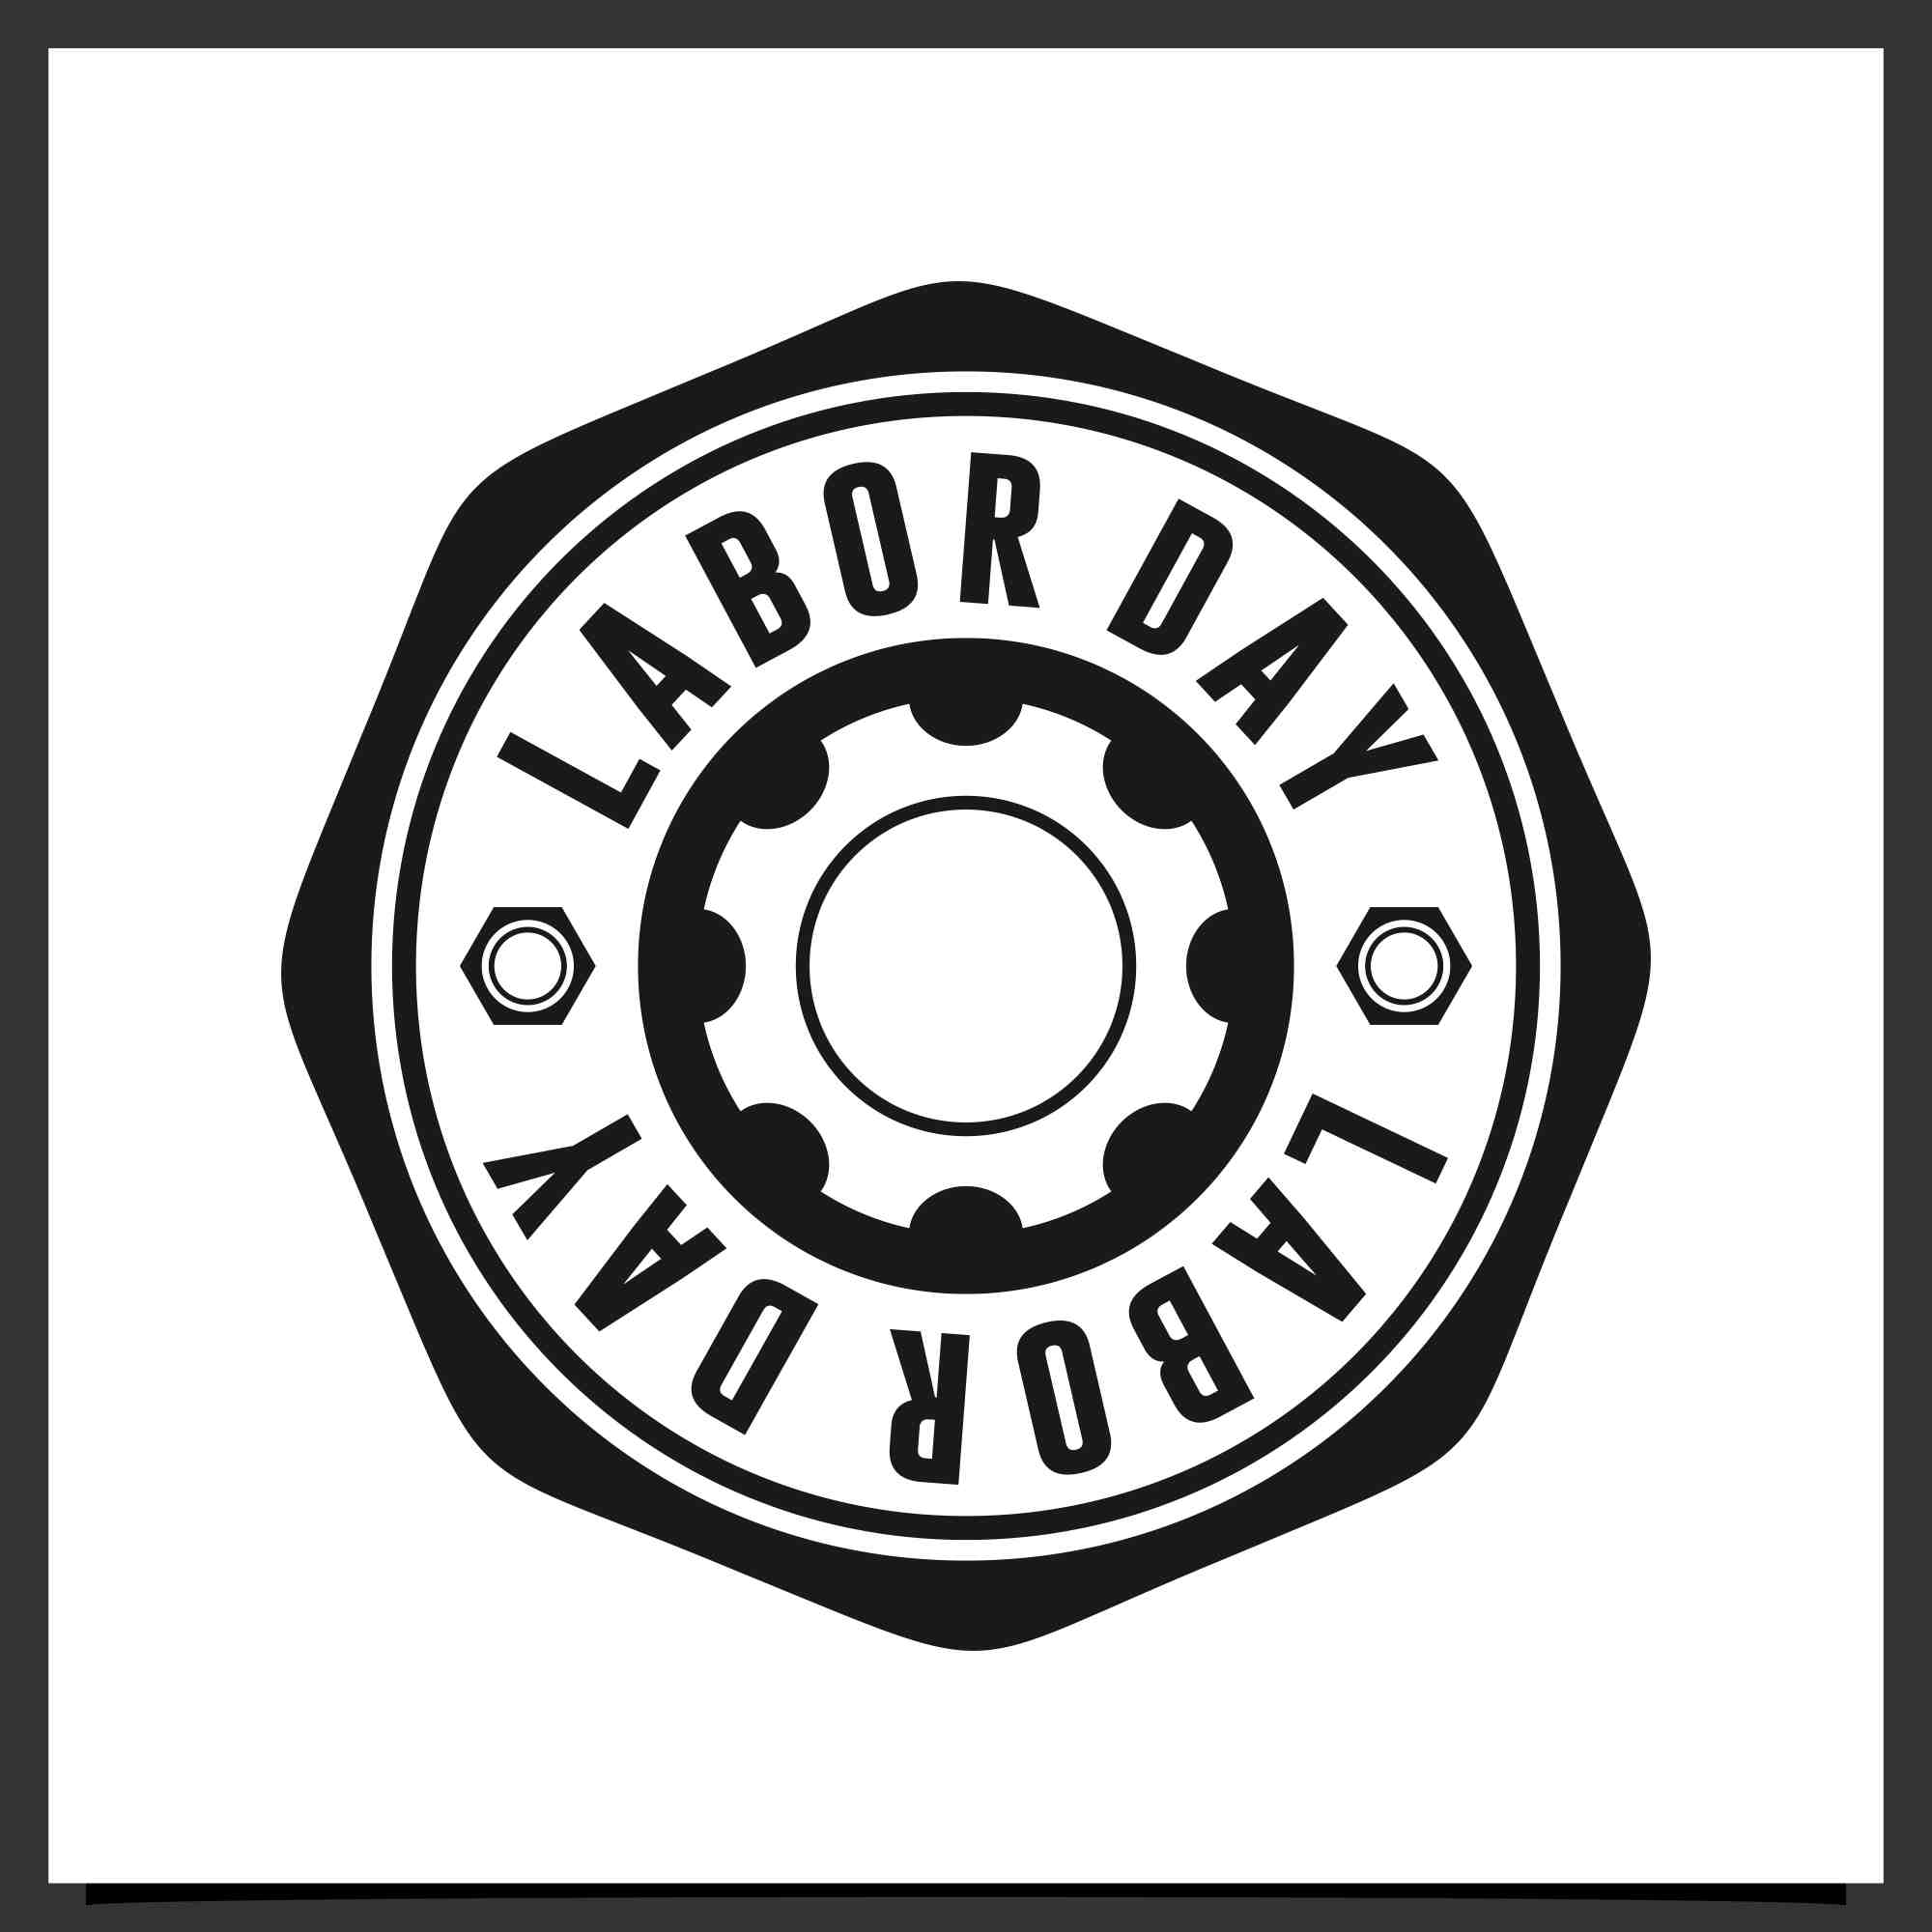 labor day badge stamps logo design 5 911